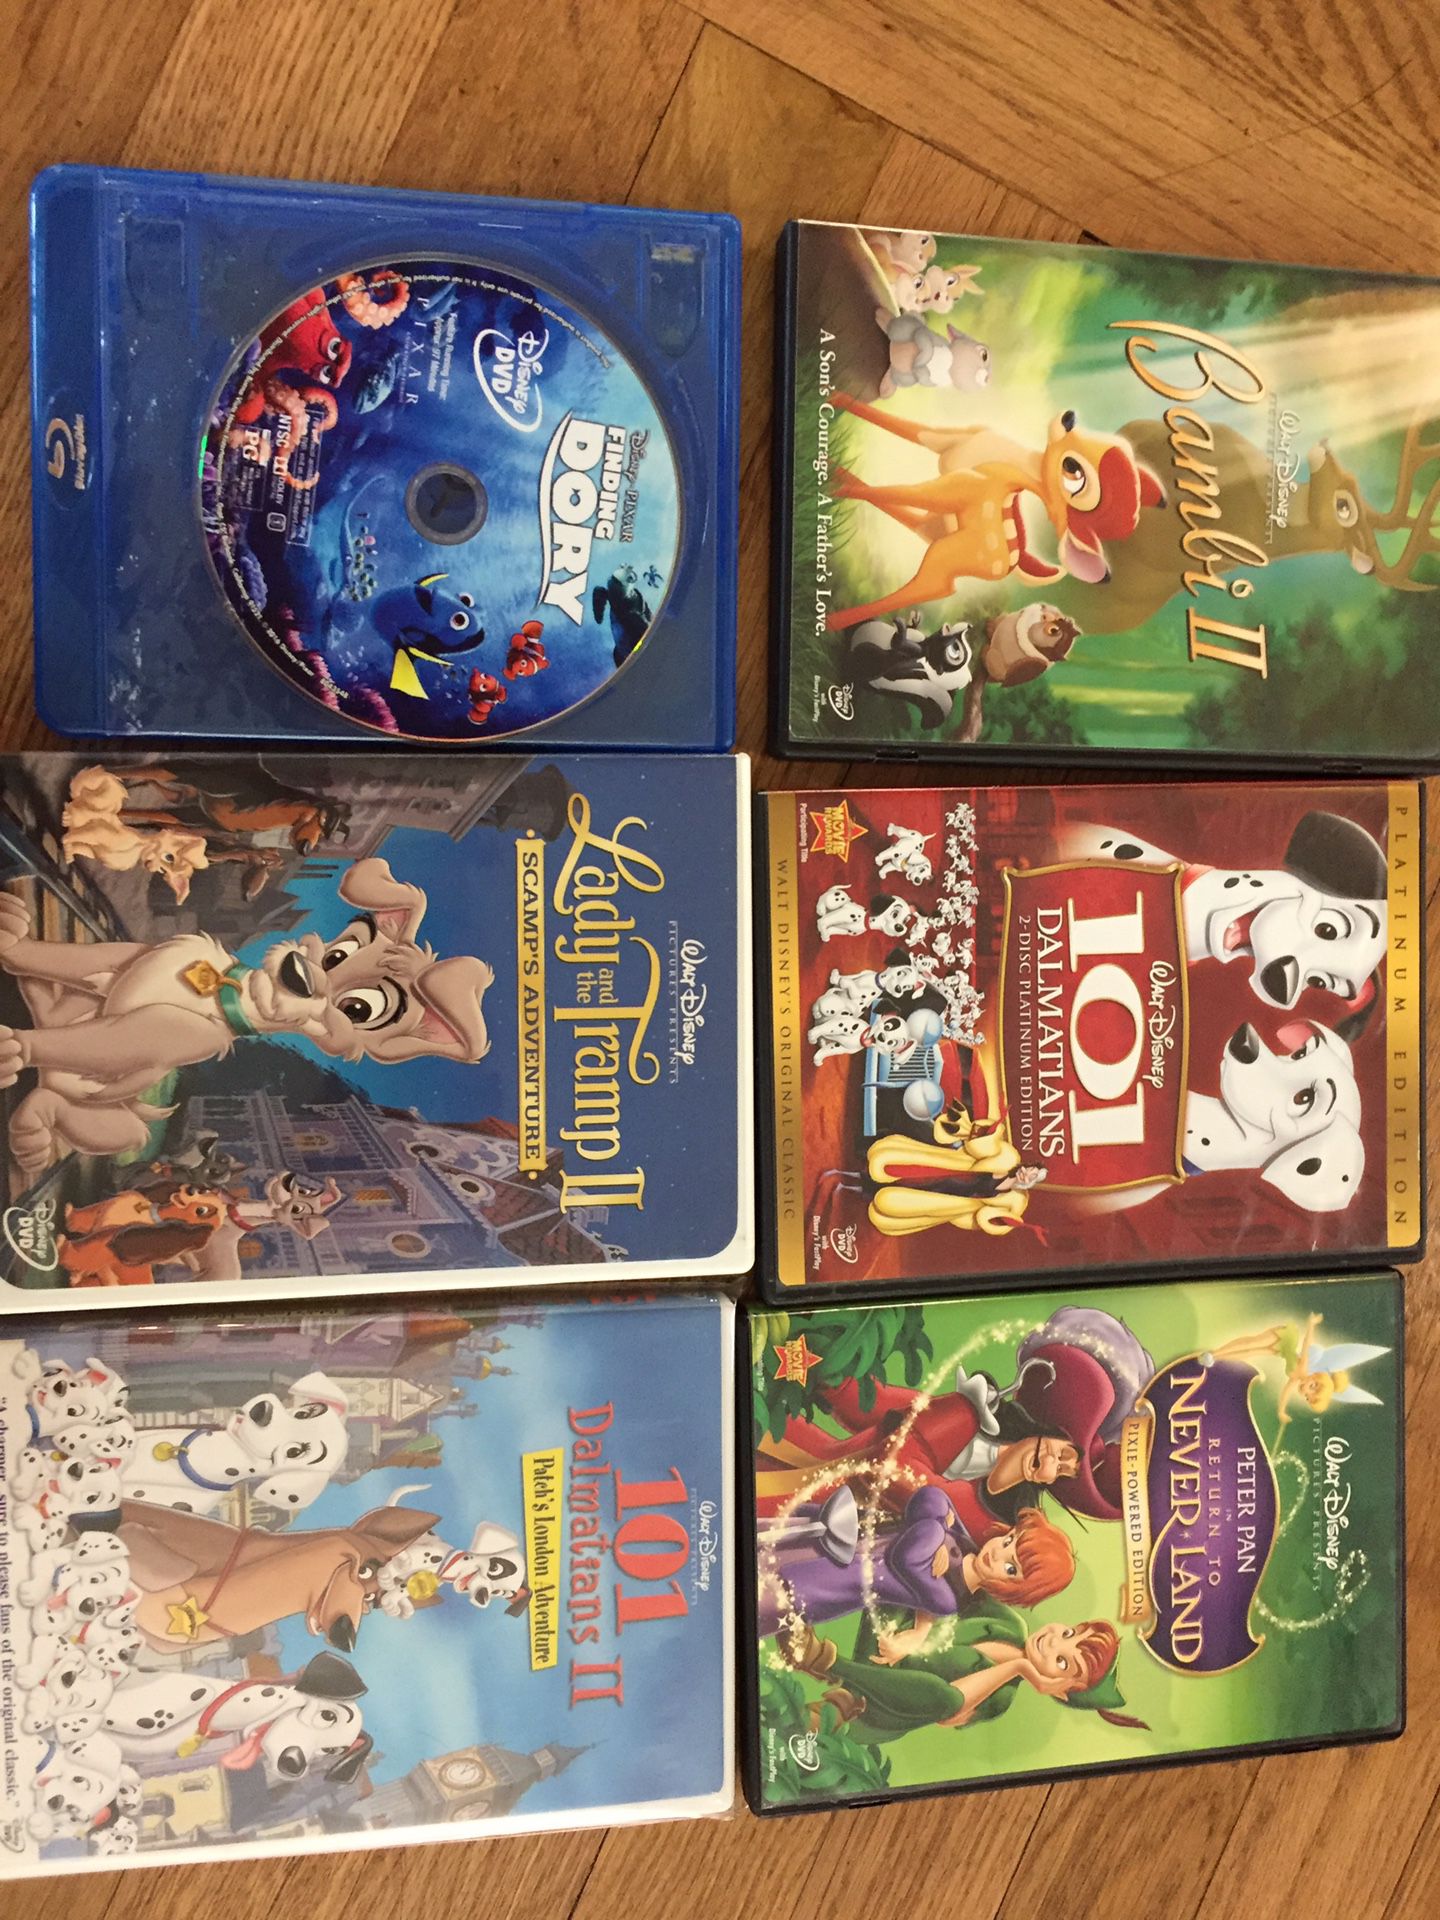 Disney kids DVDs